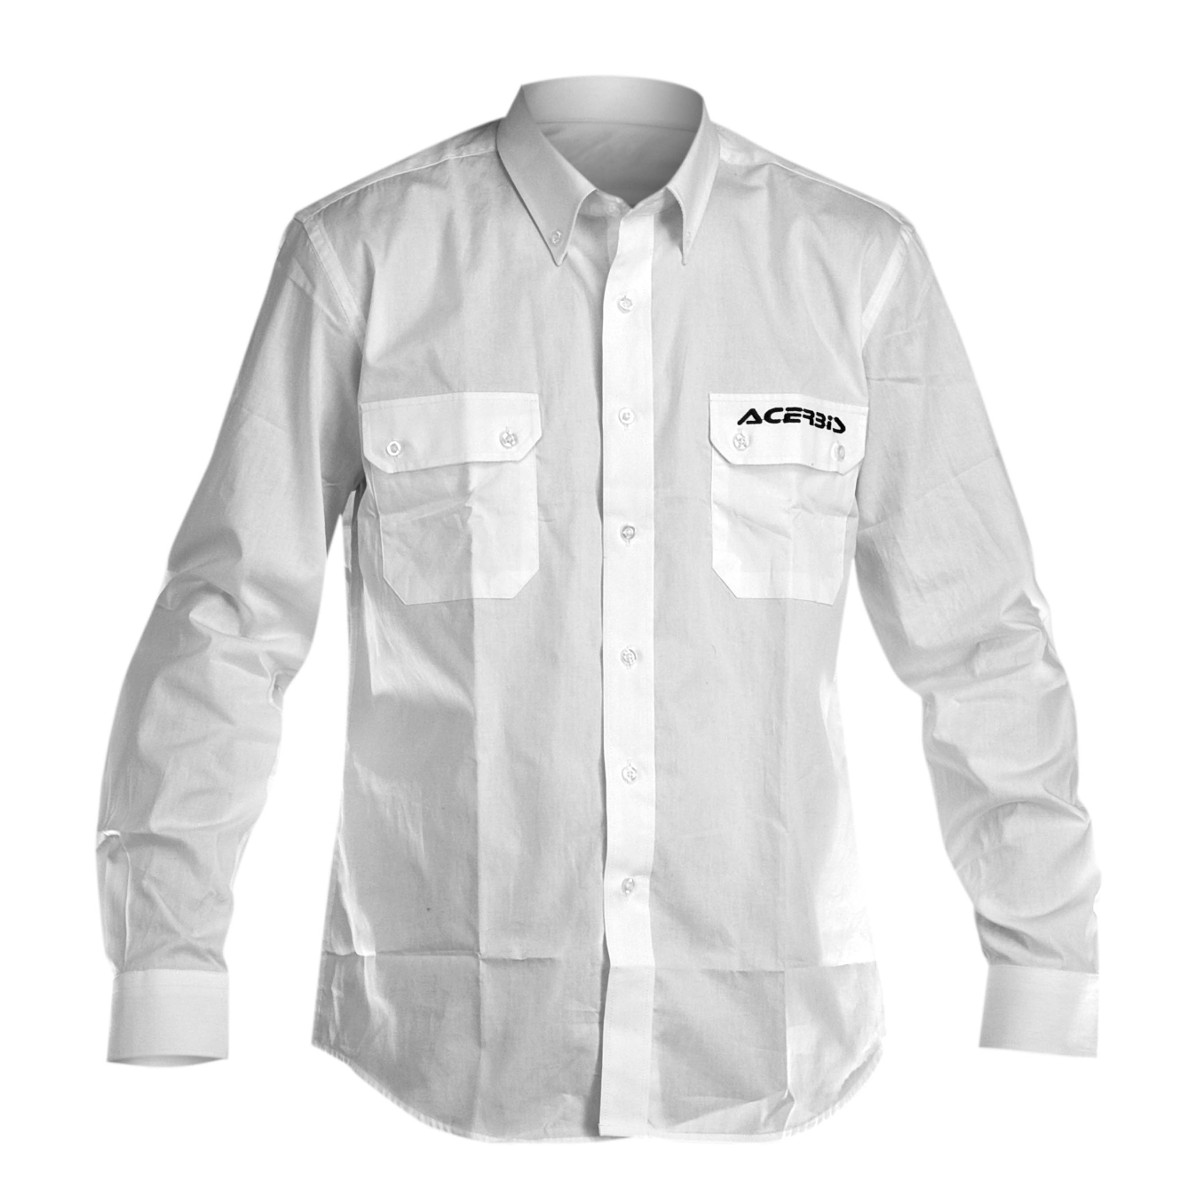 Acerbis Shirt Long Sleeve Corporate White